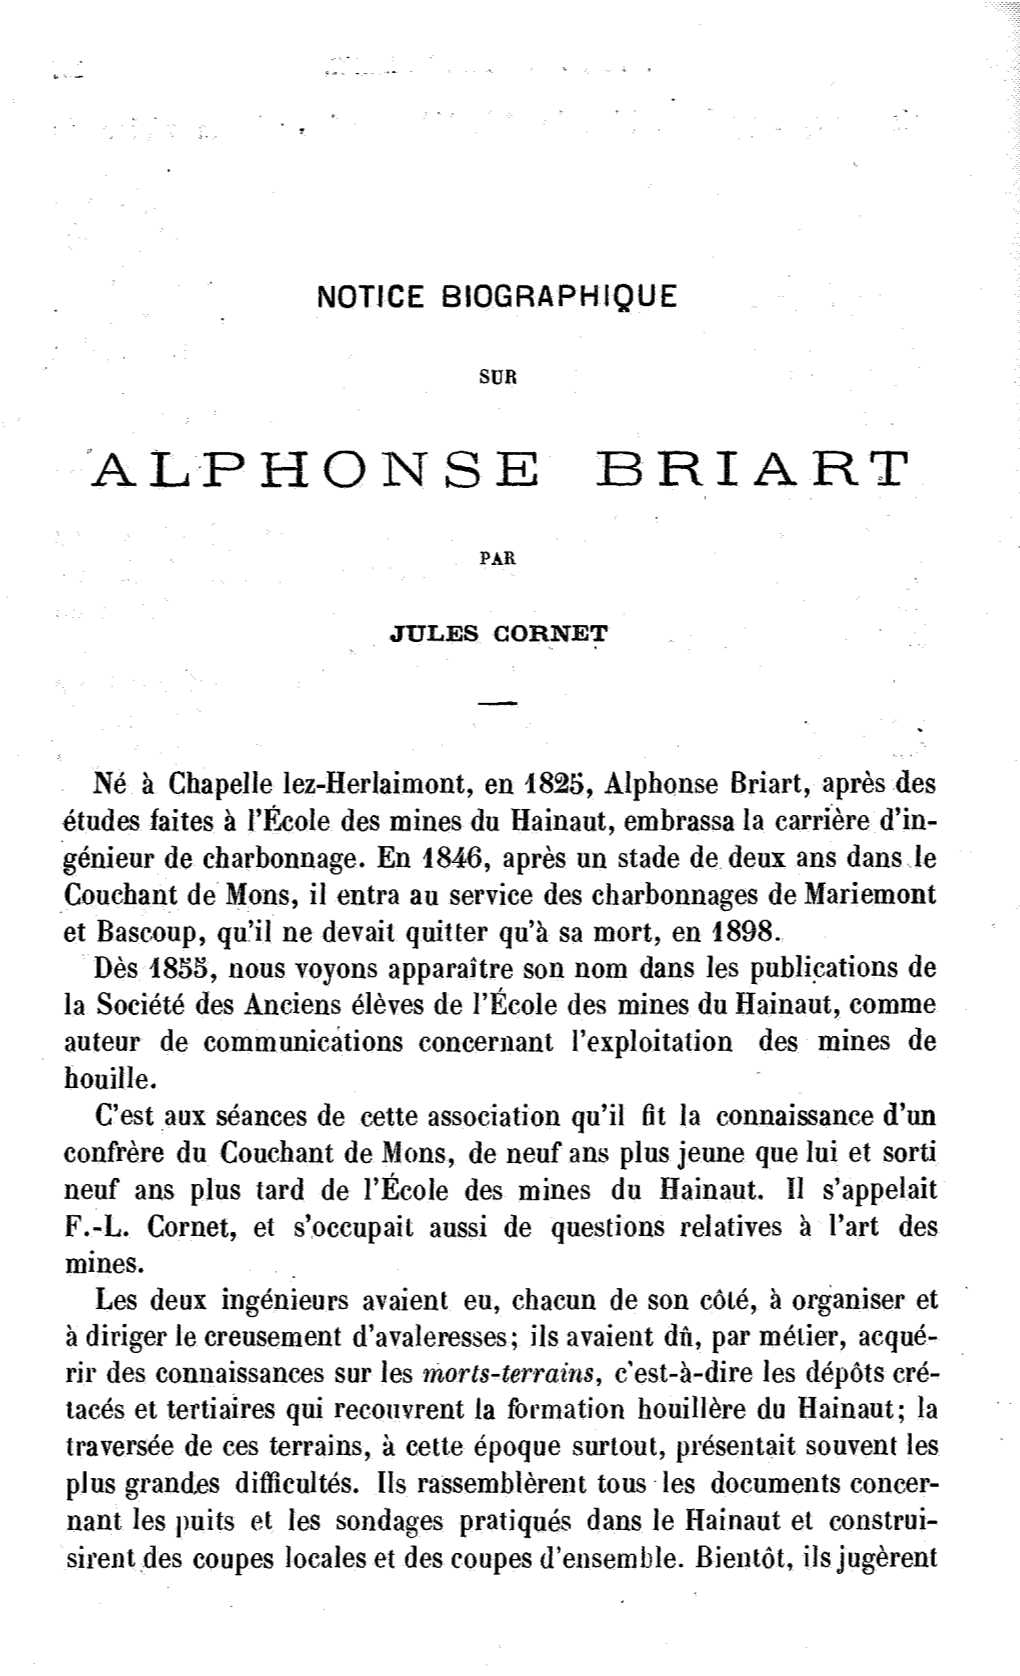 Alphonse Briart